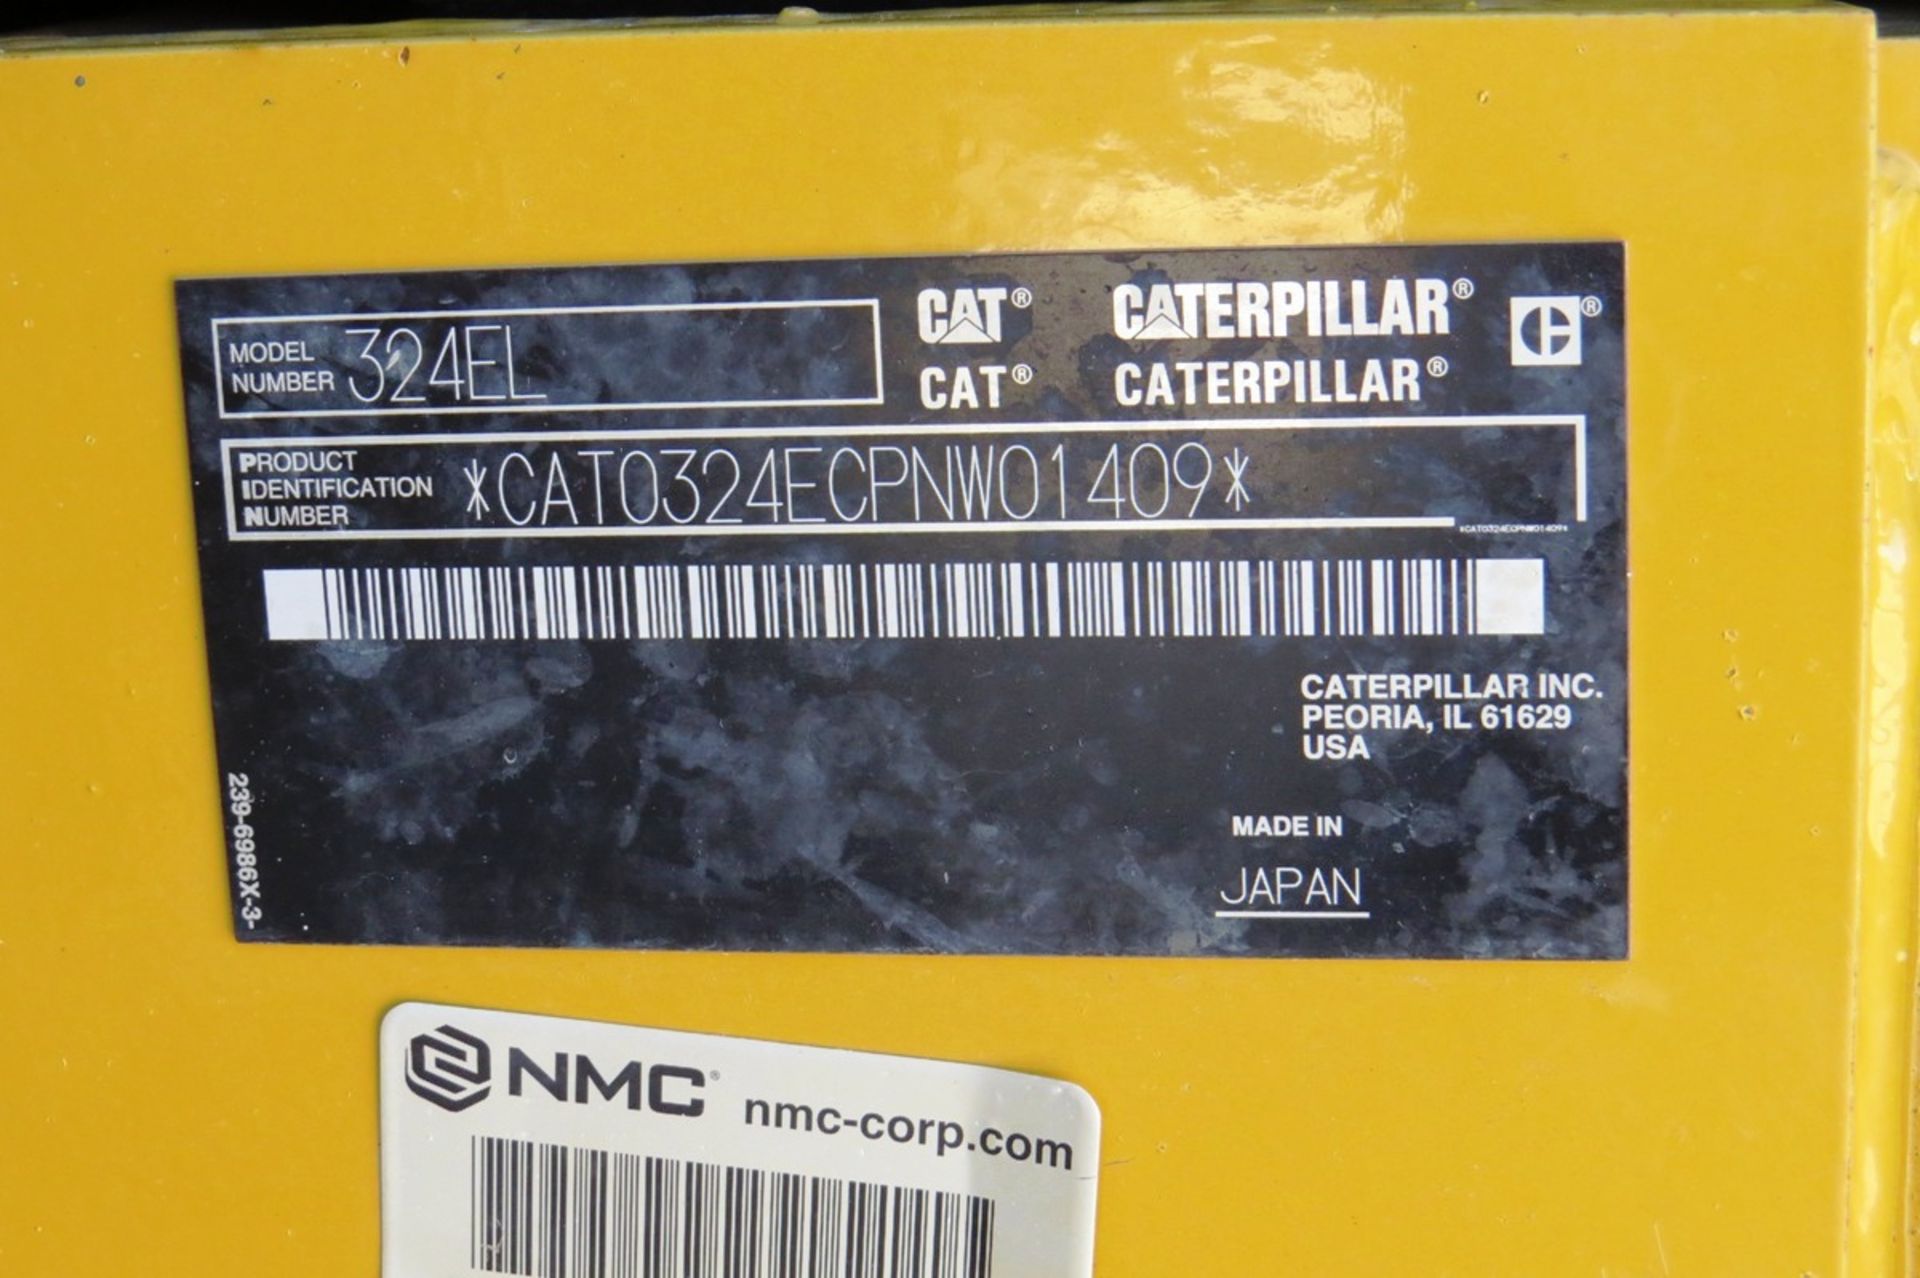 2014 Caterpillar Model 324EL Hydraulic Track-Type Excavator, SN# CATO324ECPNW01409, Caterpillar - Image 10 of 61